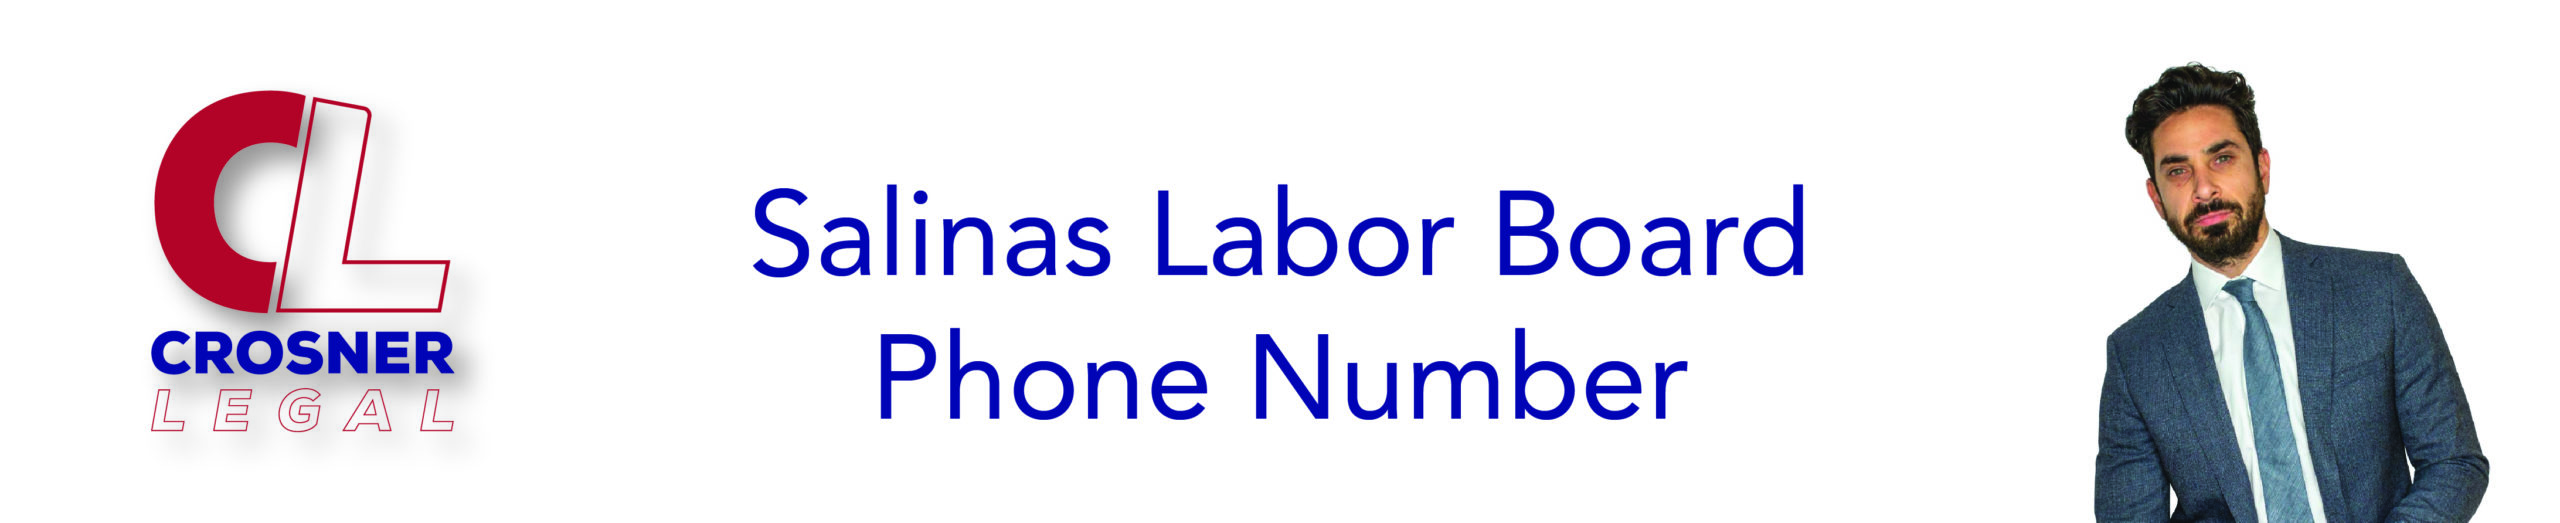 Salinas Labor Board Phone Number